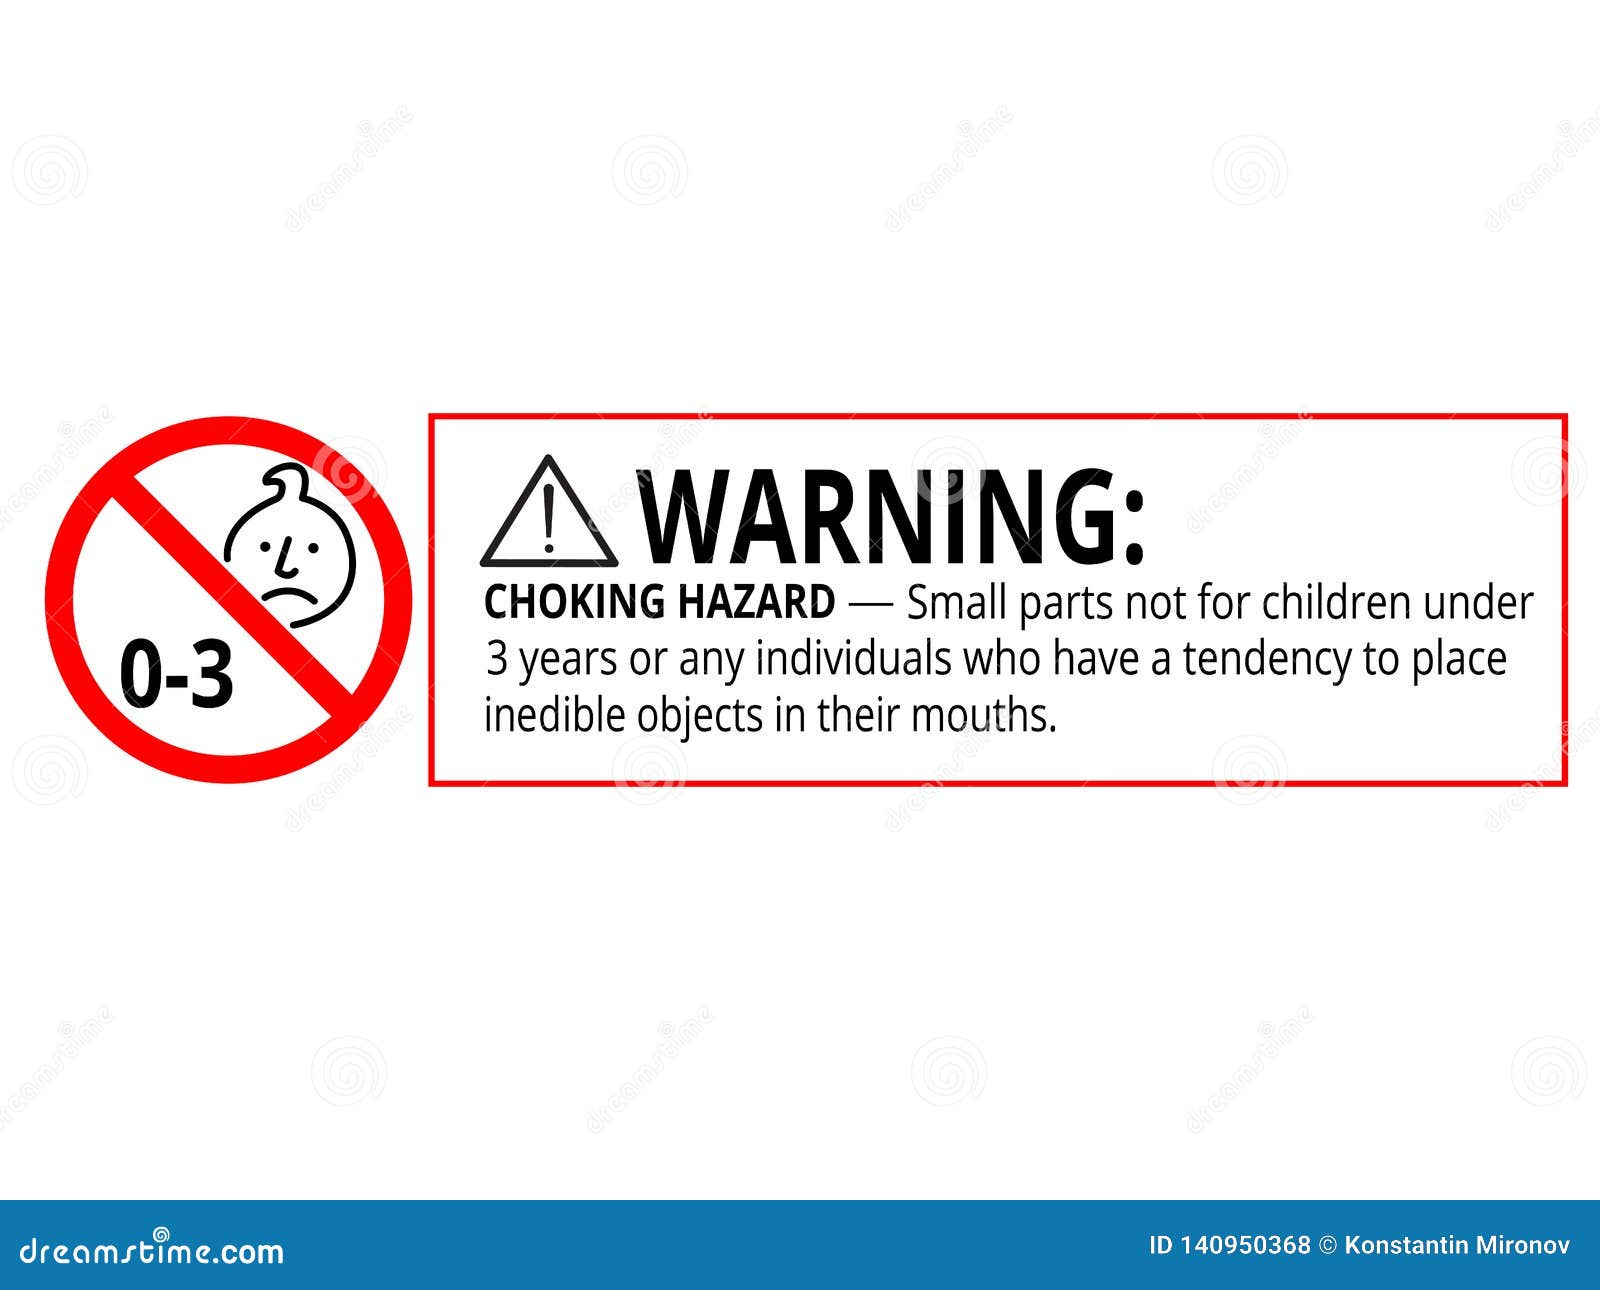 warning choking hazard small parts no for infant 0-3 years forbidden sign